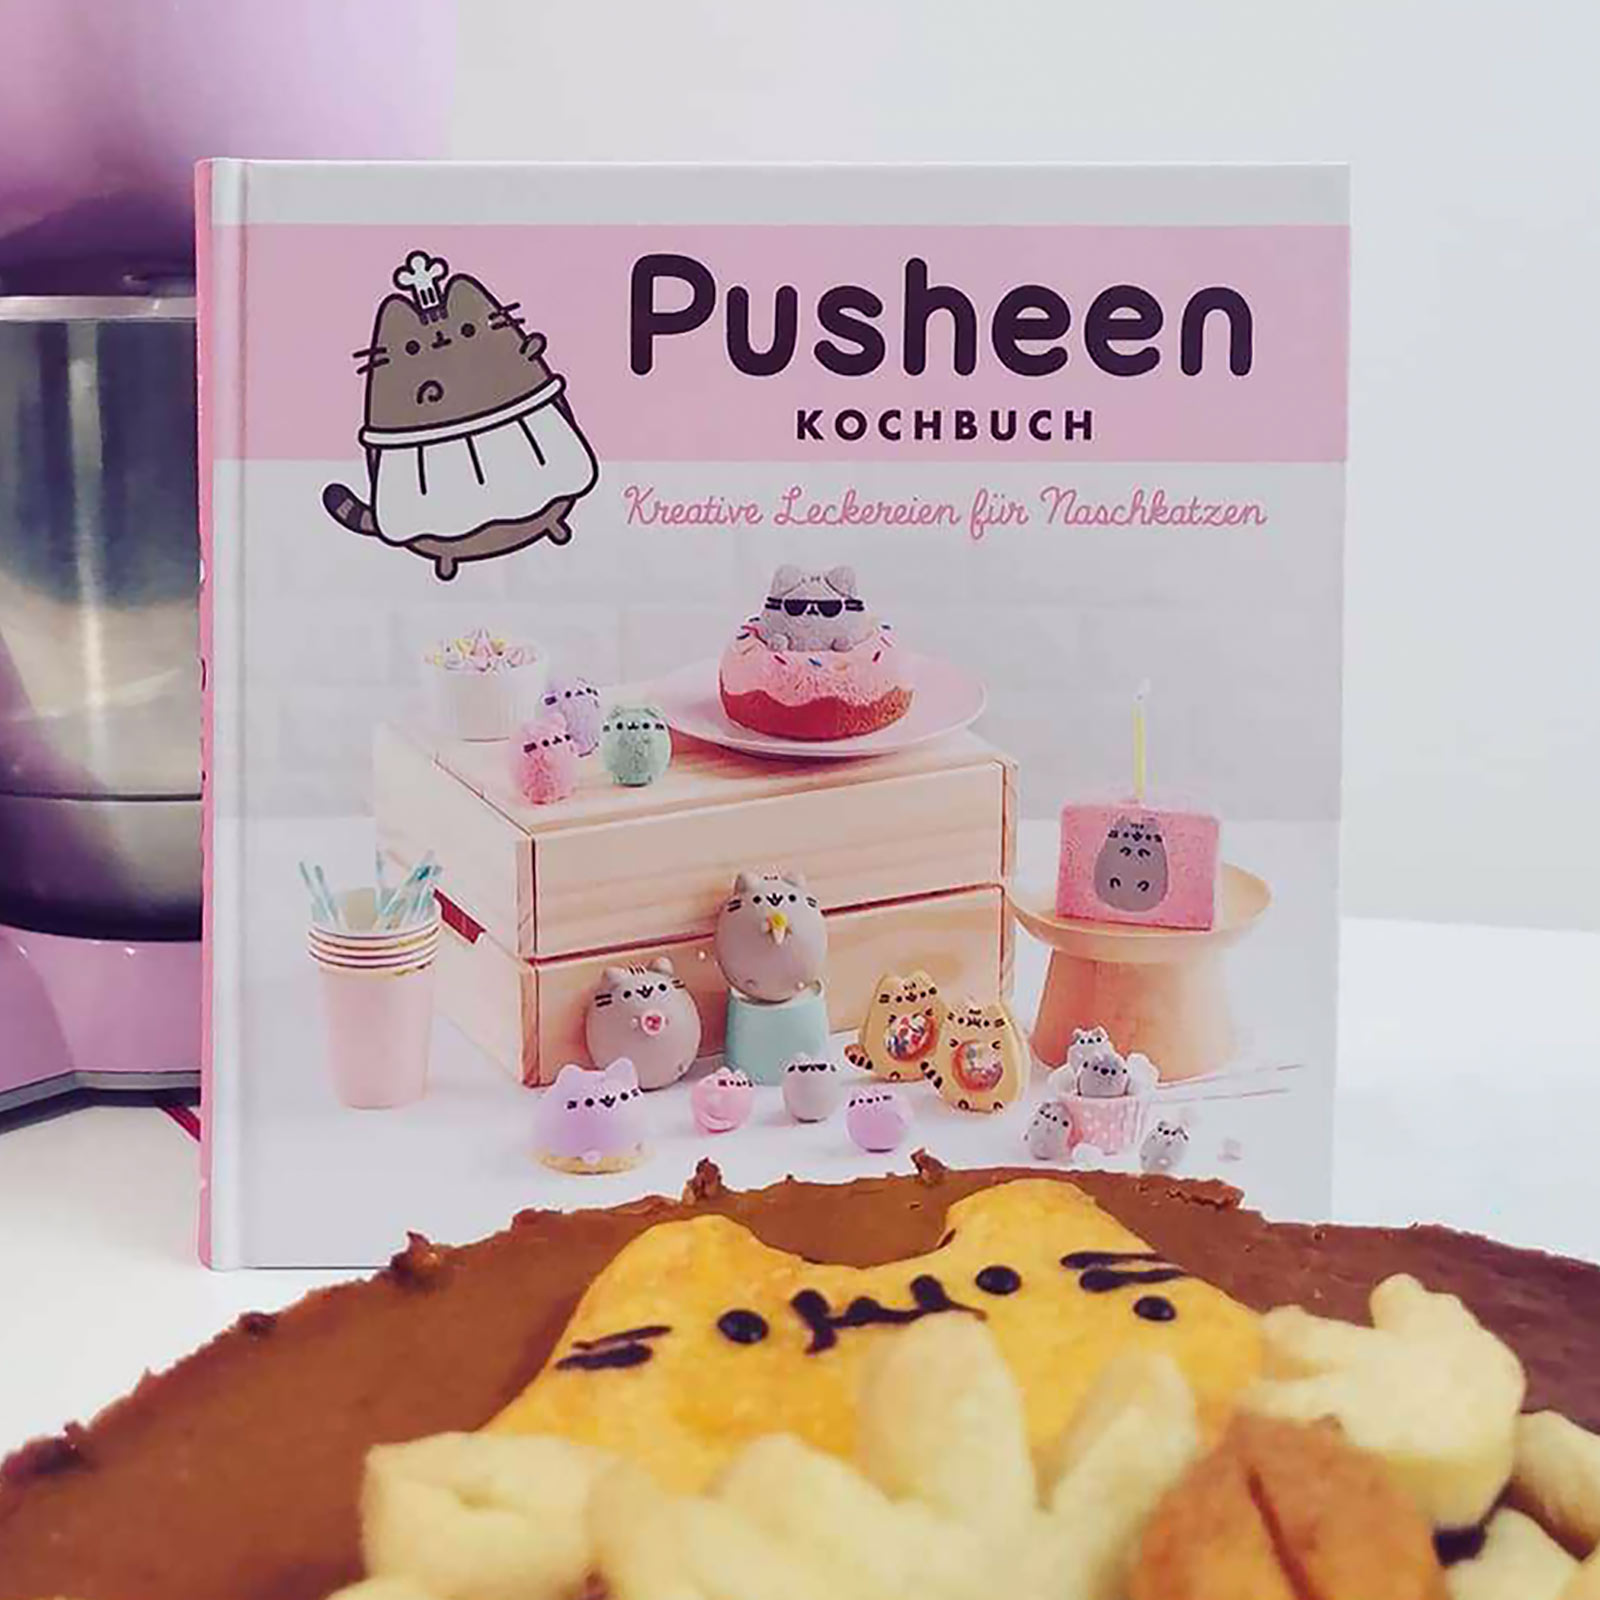 Pusheen Kochbuch - Kreative Leckereien für Naschkatzen